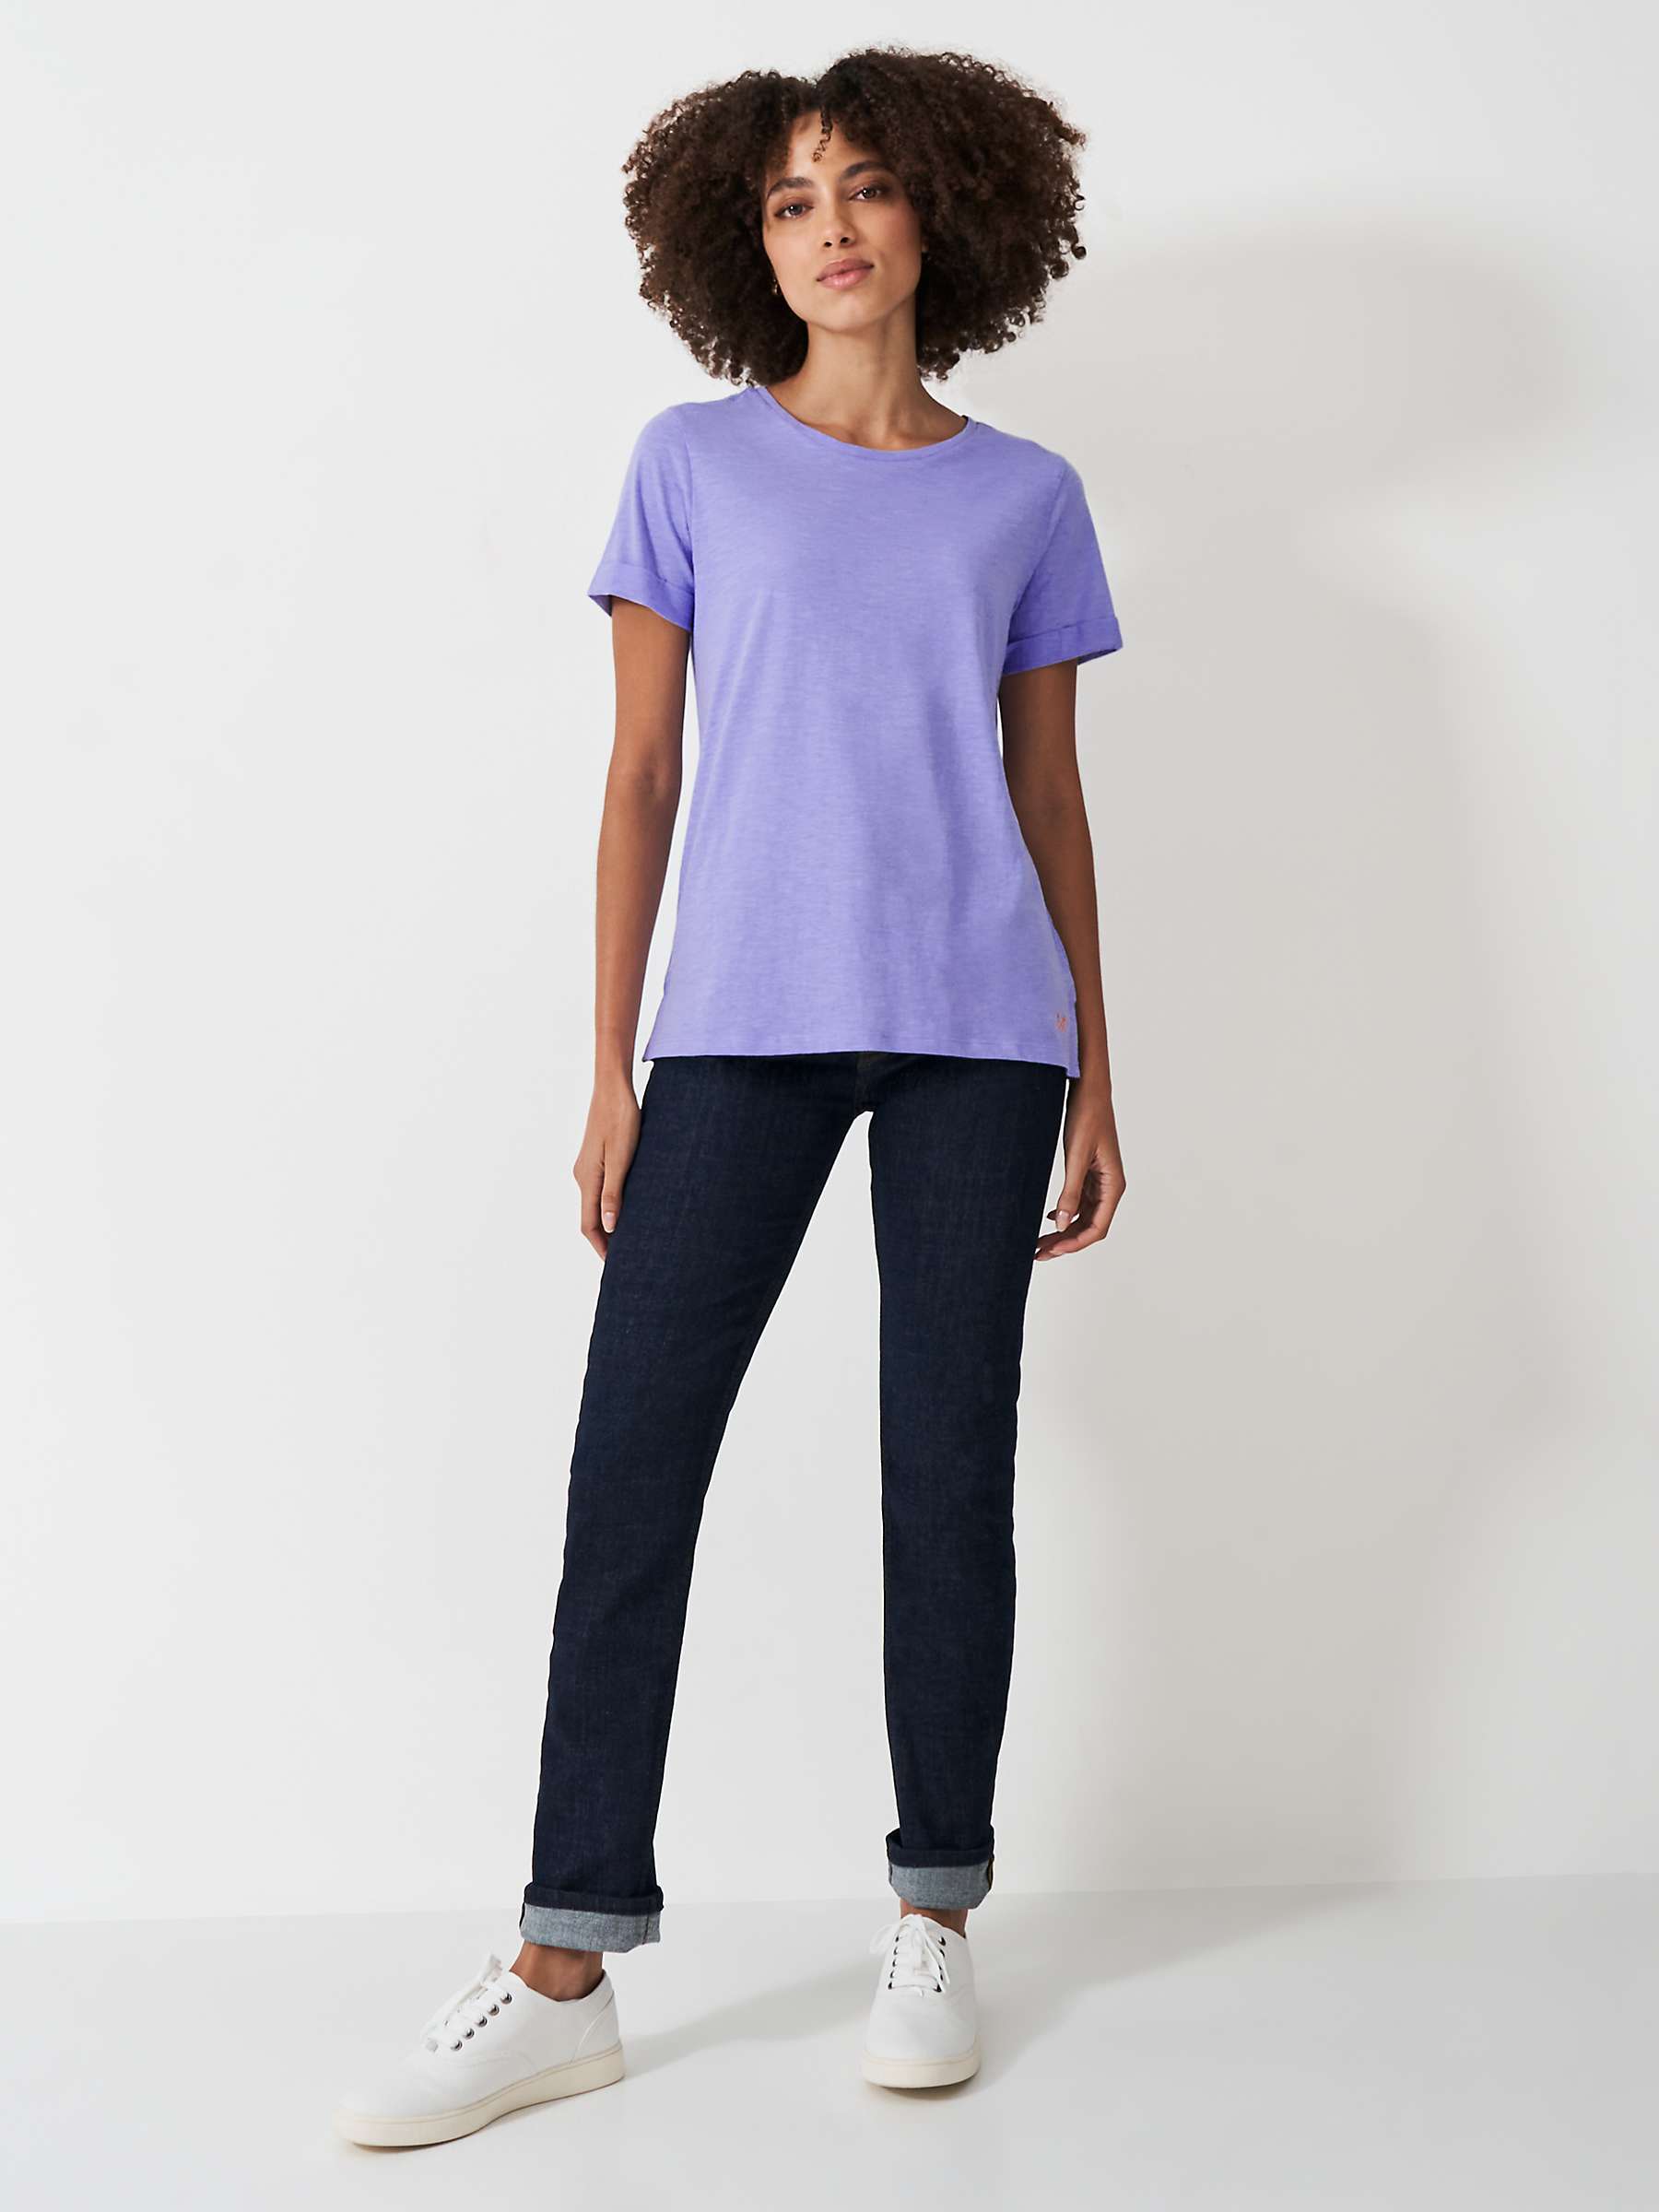 Buy Crew Clothing Crew Neck T-Shirt, Light Purple Online at johnlewis.com